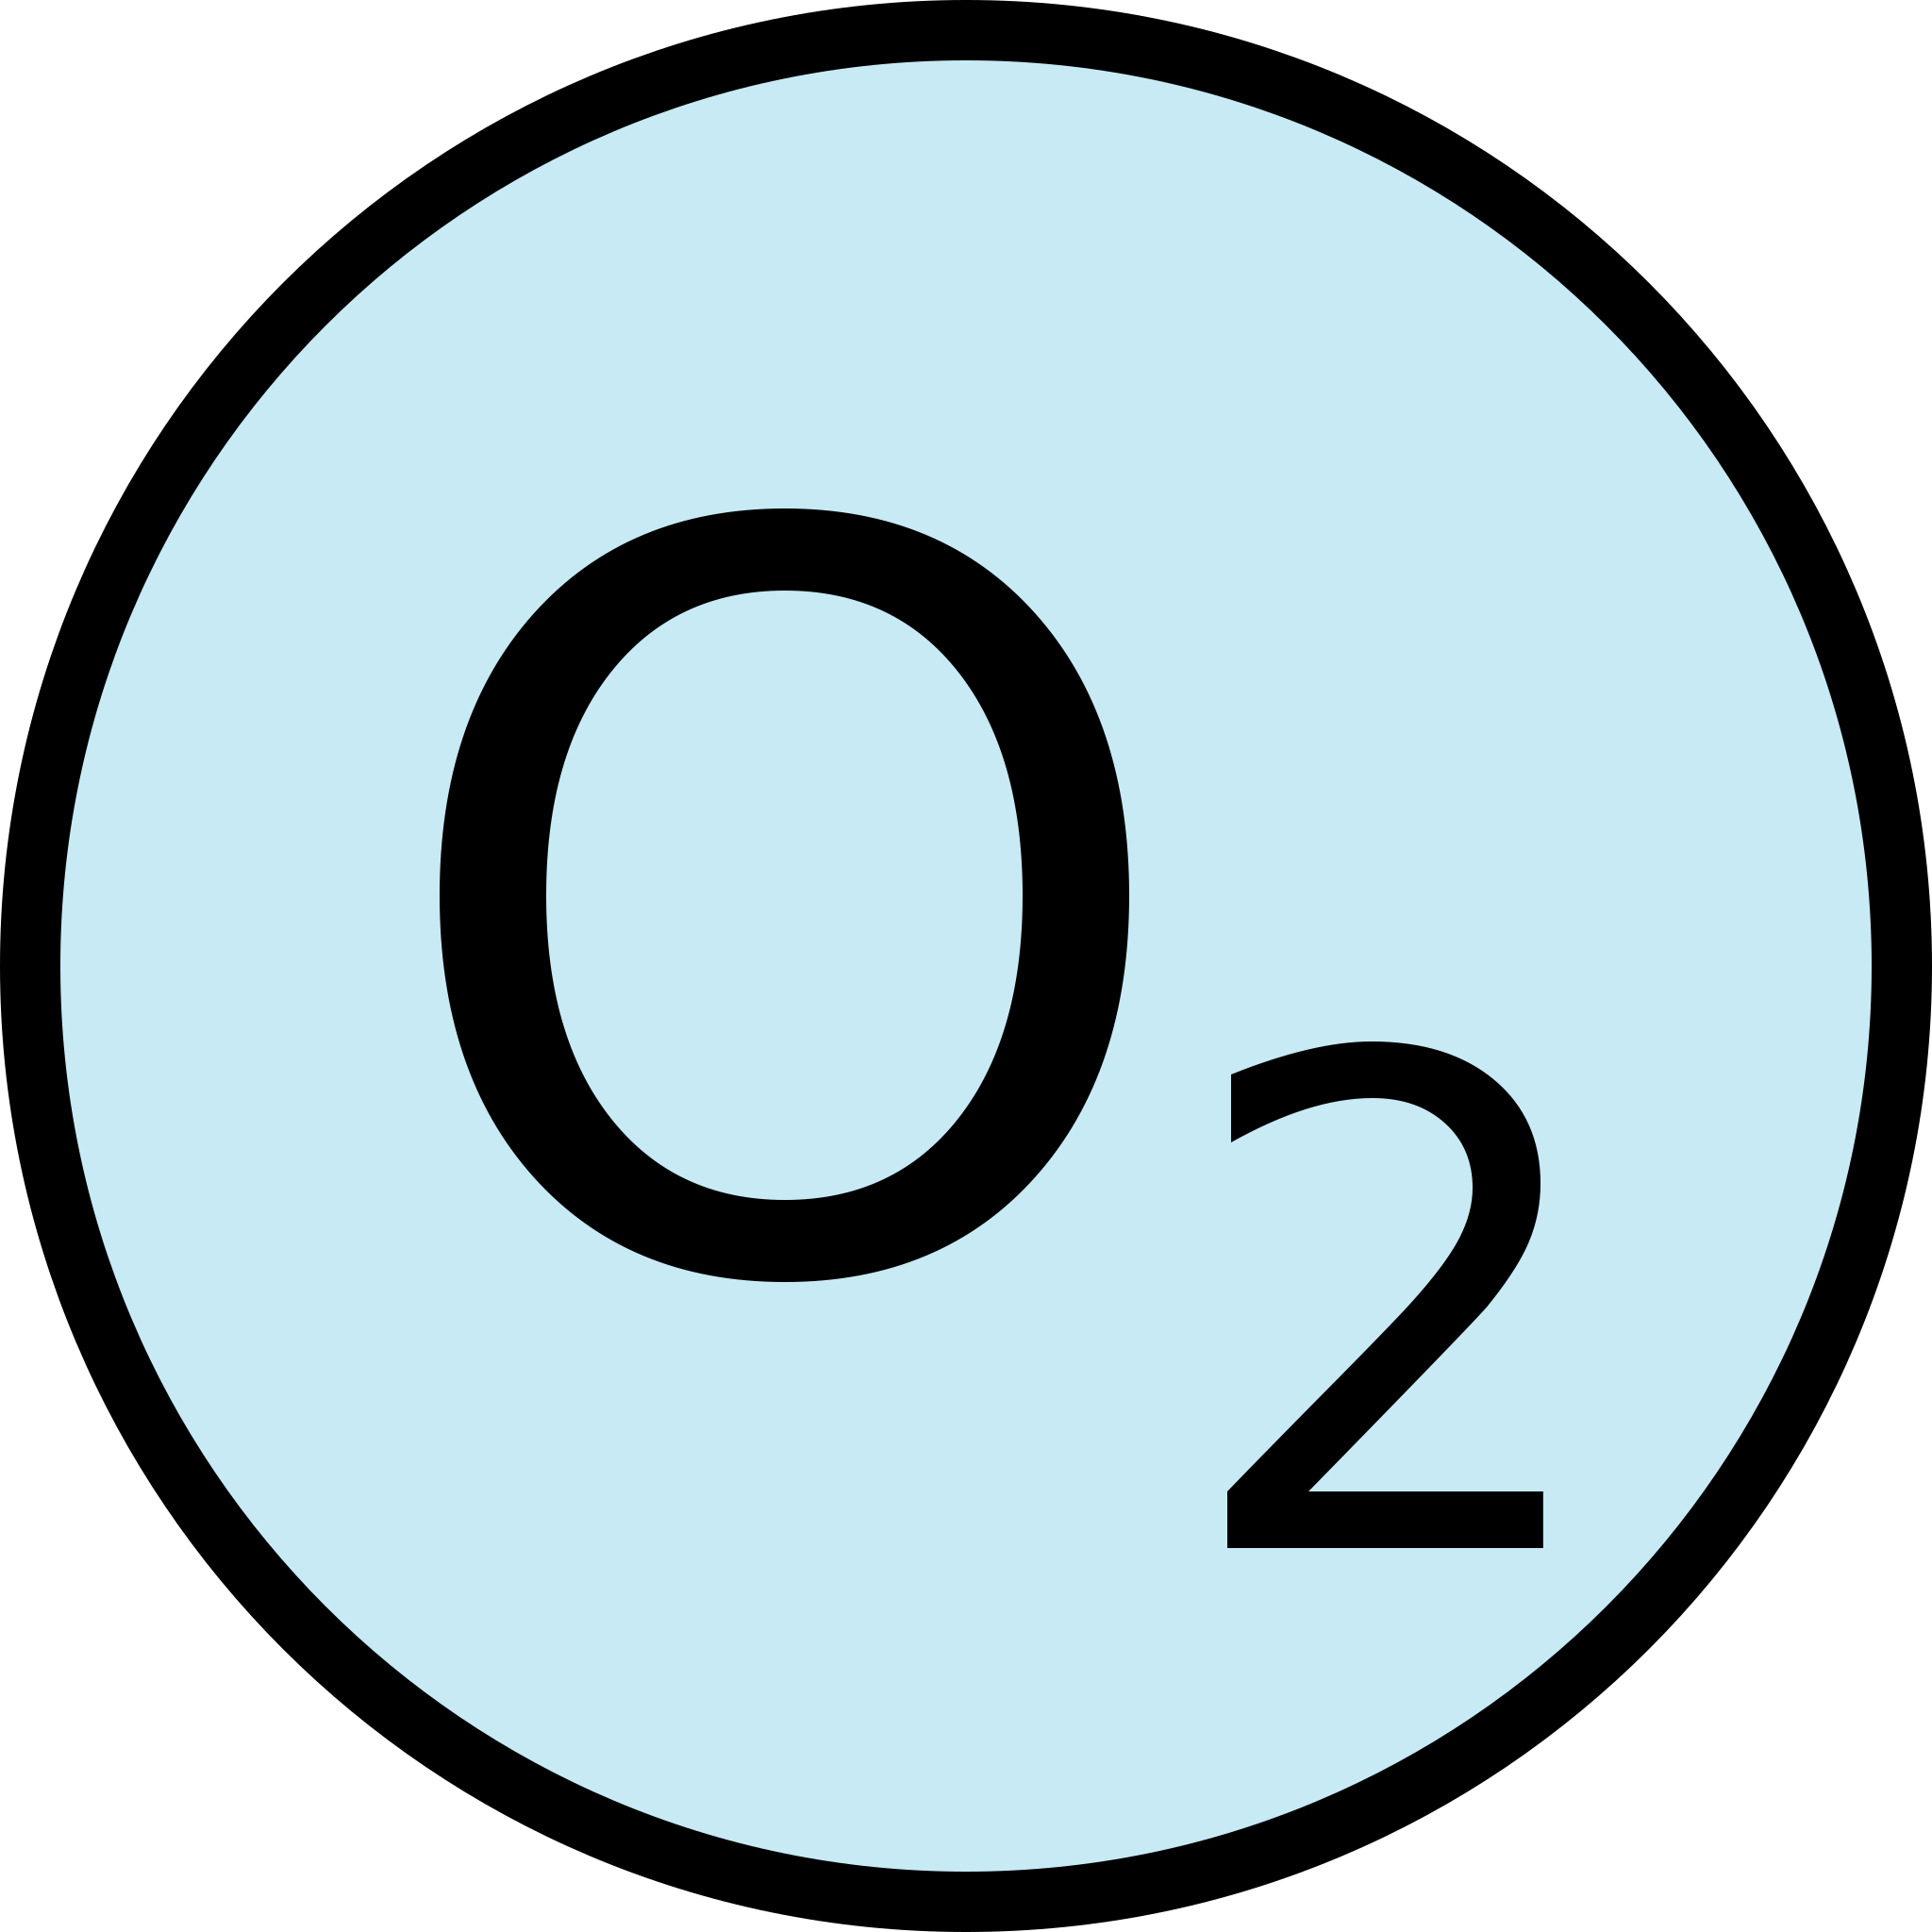 https://upload.wikimedia.org/wikipedia/commons/thumb/7/79/Oxygen_symbol.svg/2048px-Oxygen_symbol.svg.png